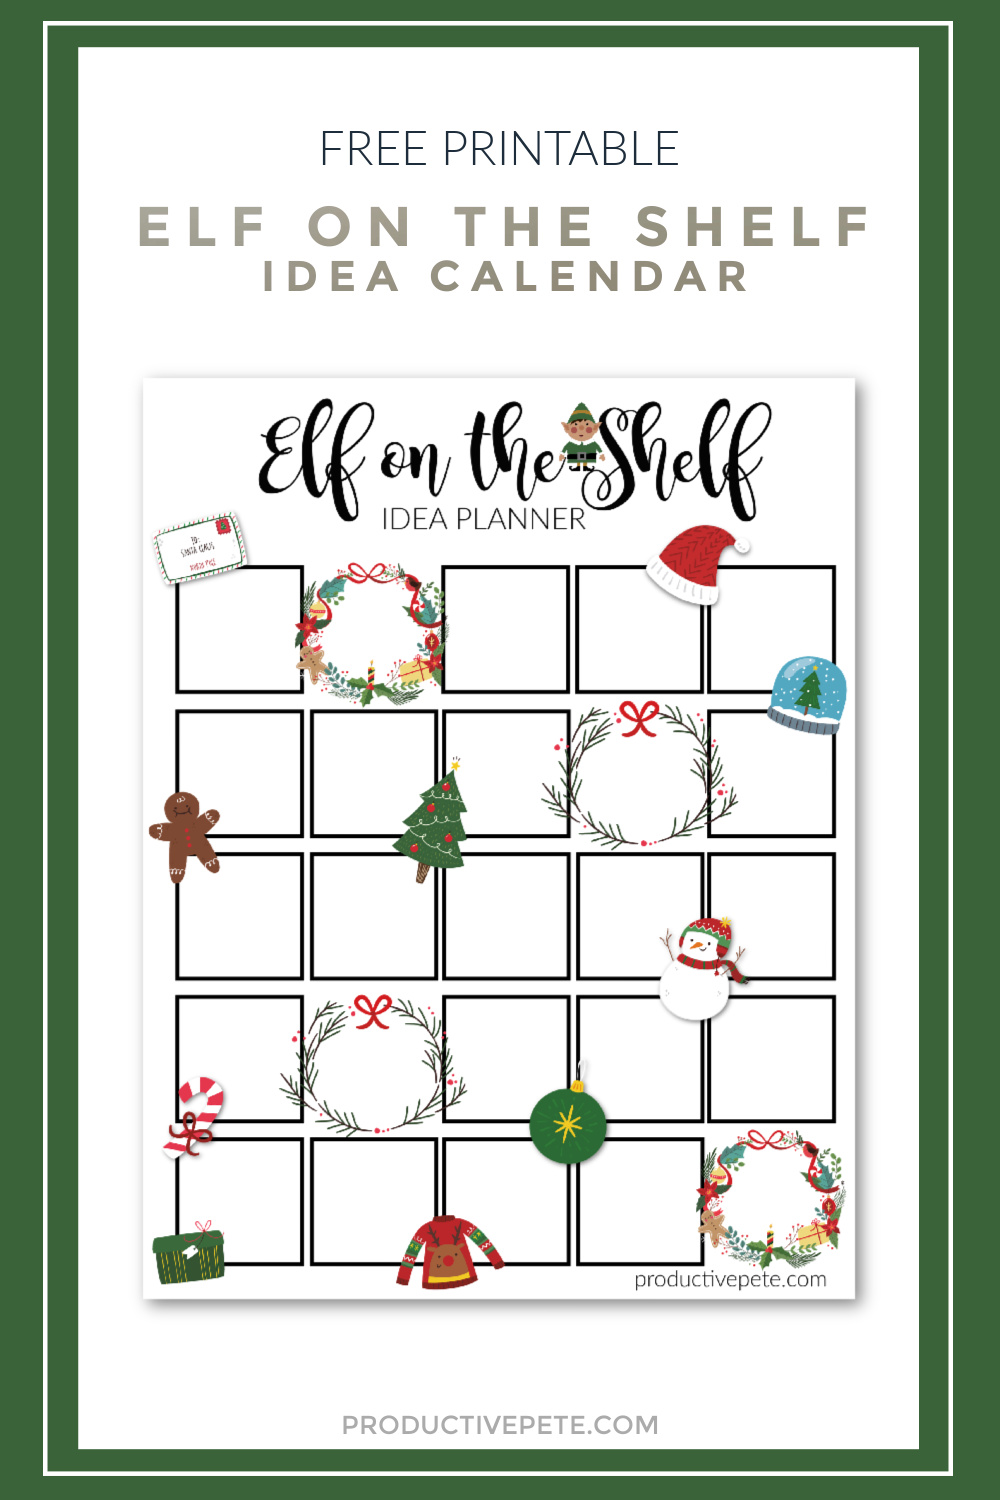 elf-on-shelf-calendar-printable-calendar